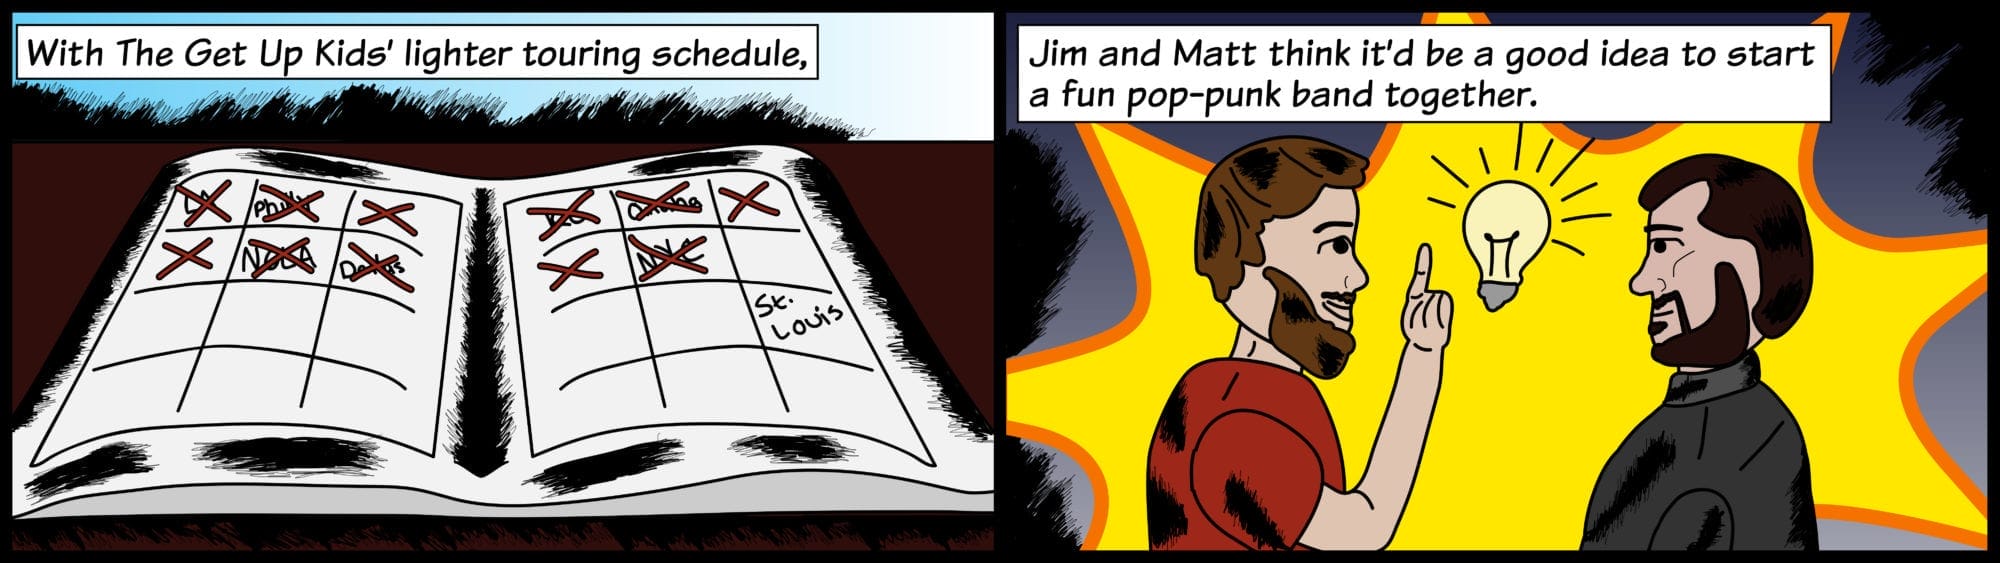 Jim and Matt join for a pop-punk band